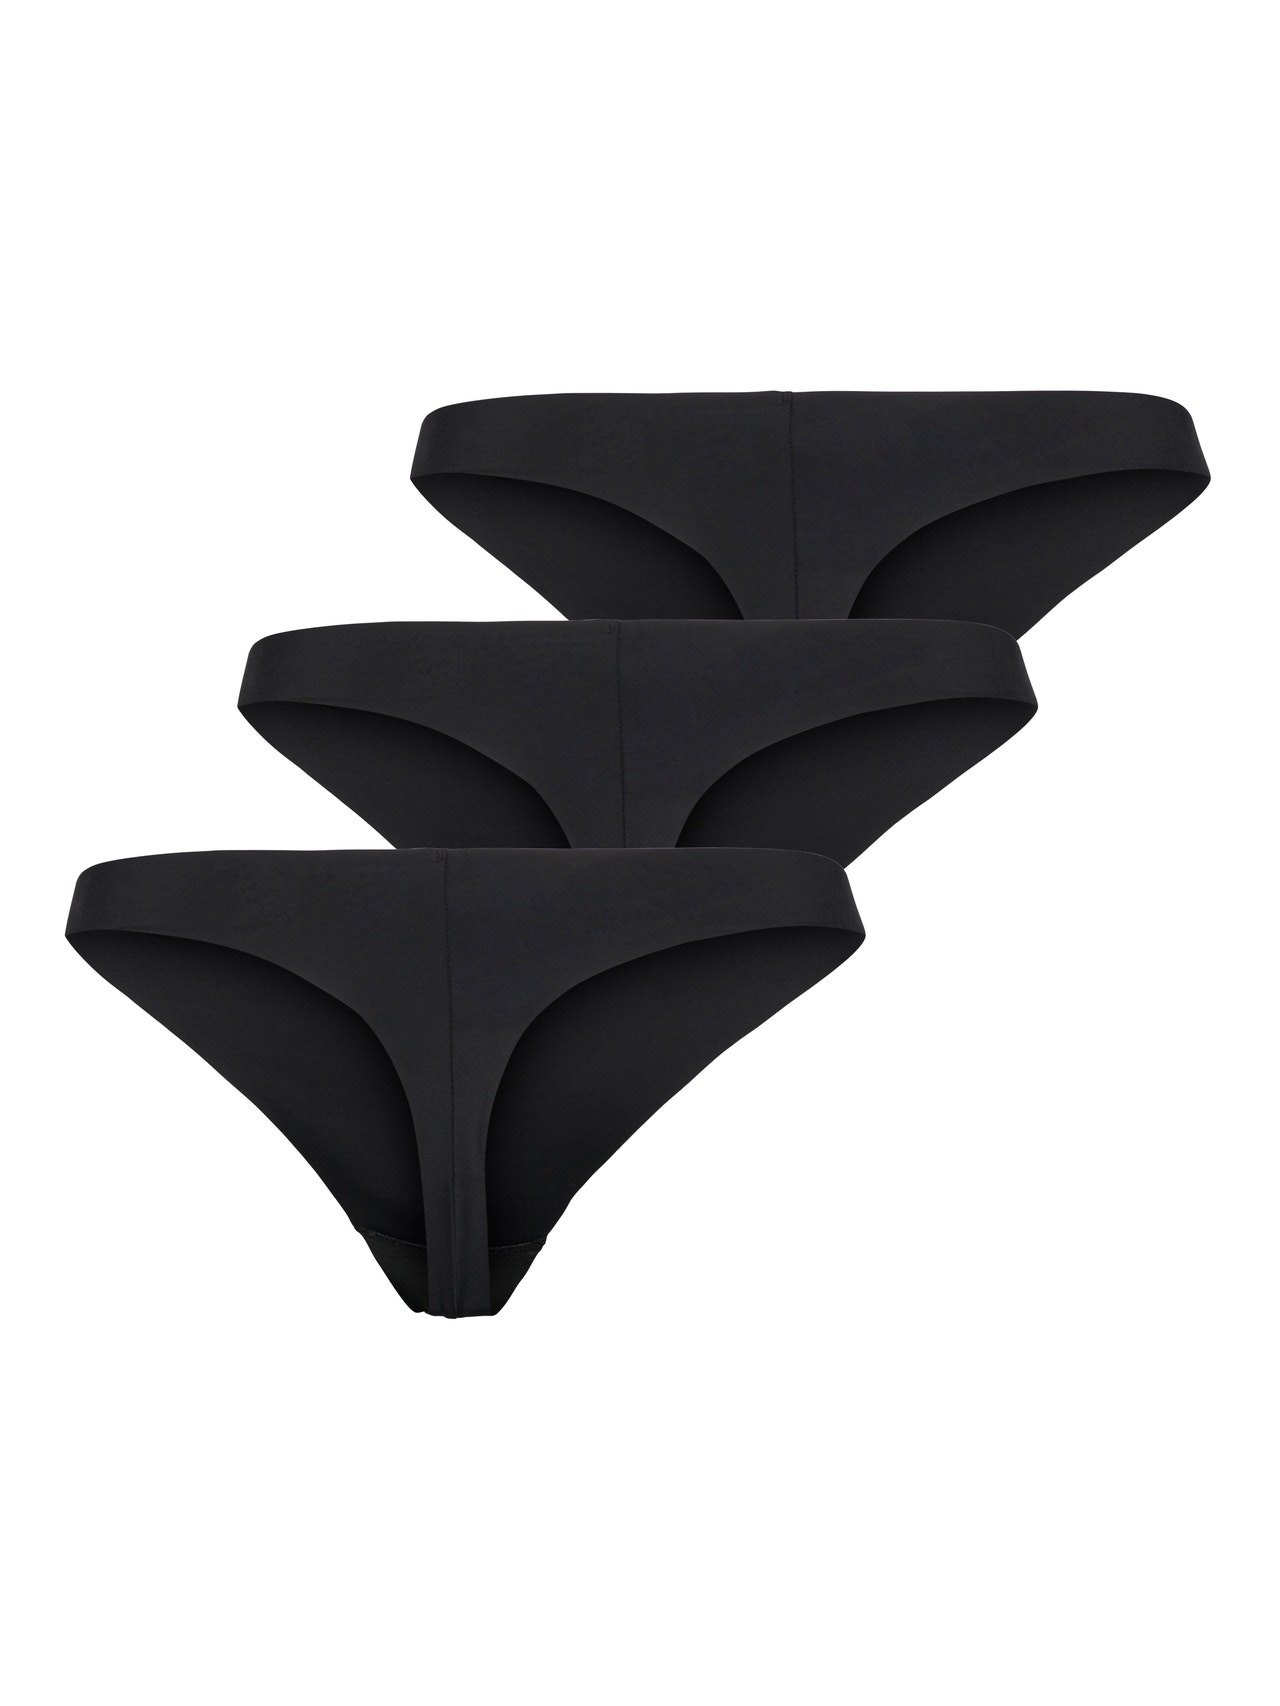 GARGOYLE BELLS 【2Pack】 Black Cotton Underwear with Words for Women Ladies  Panties Boy Shorts (as1, alpha, s, regular, regular, 2Pack-A) at   Women's Clothing store